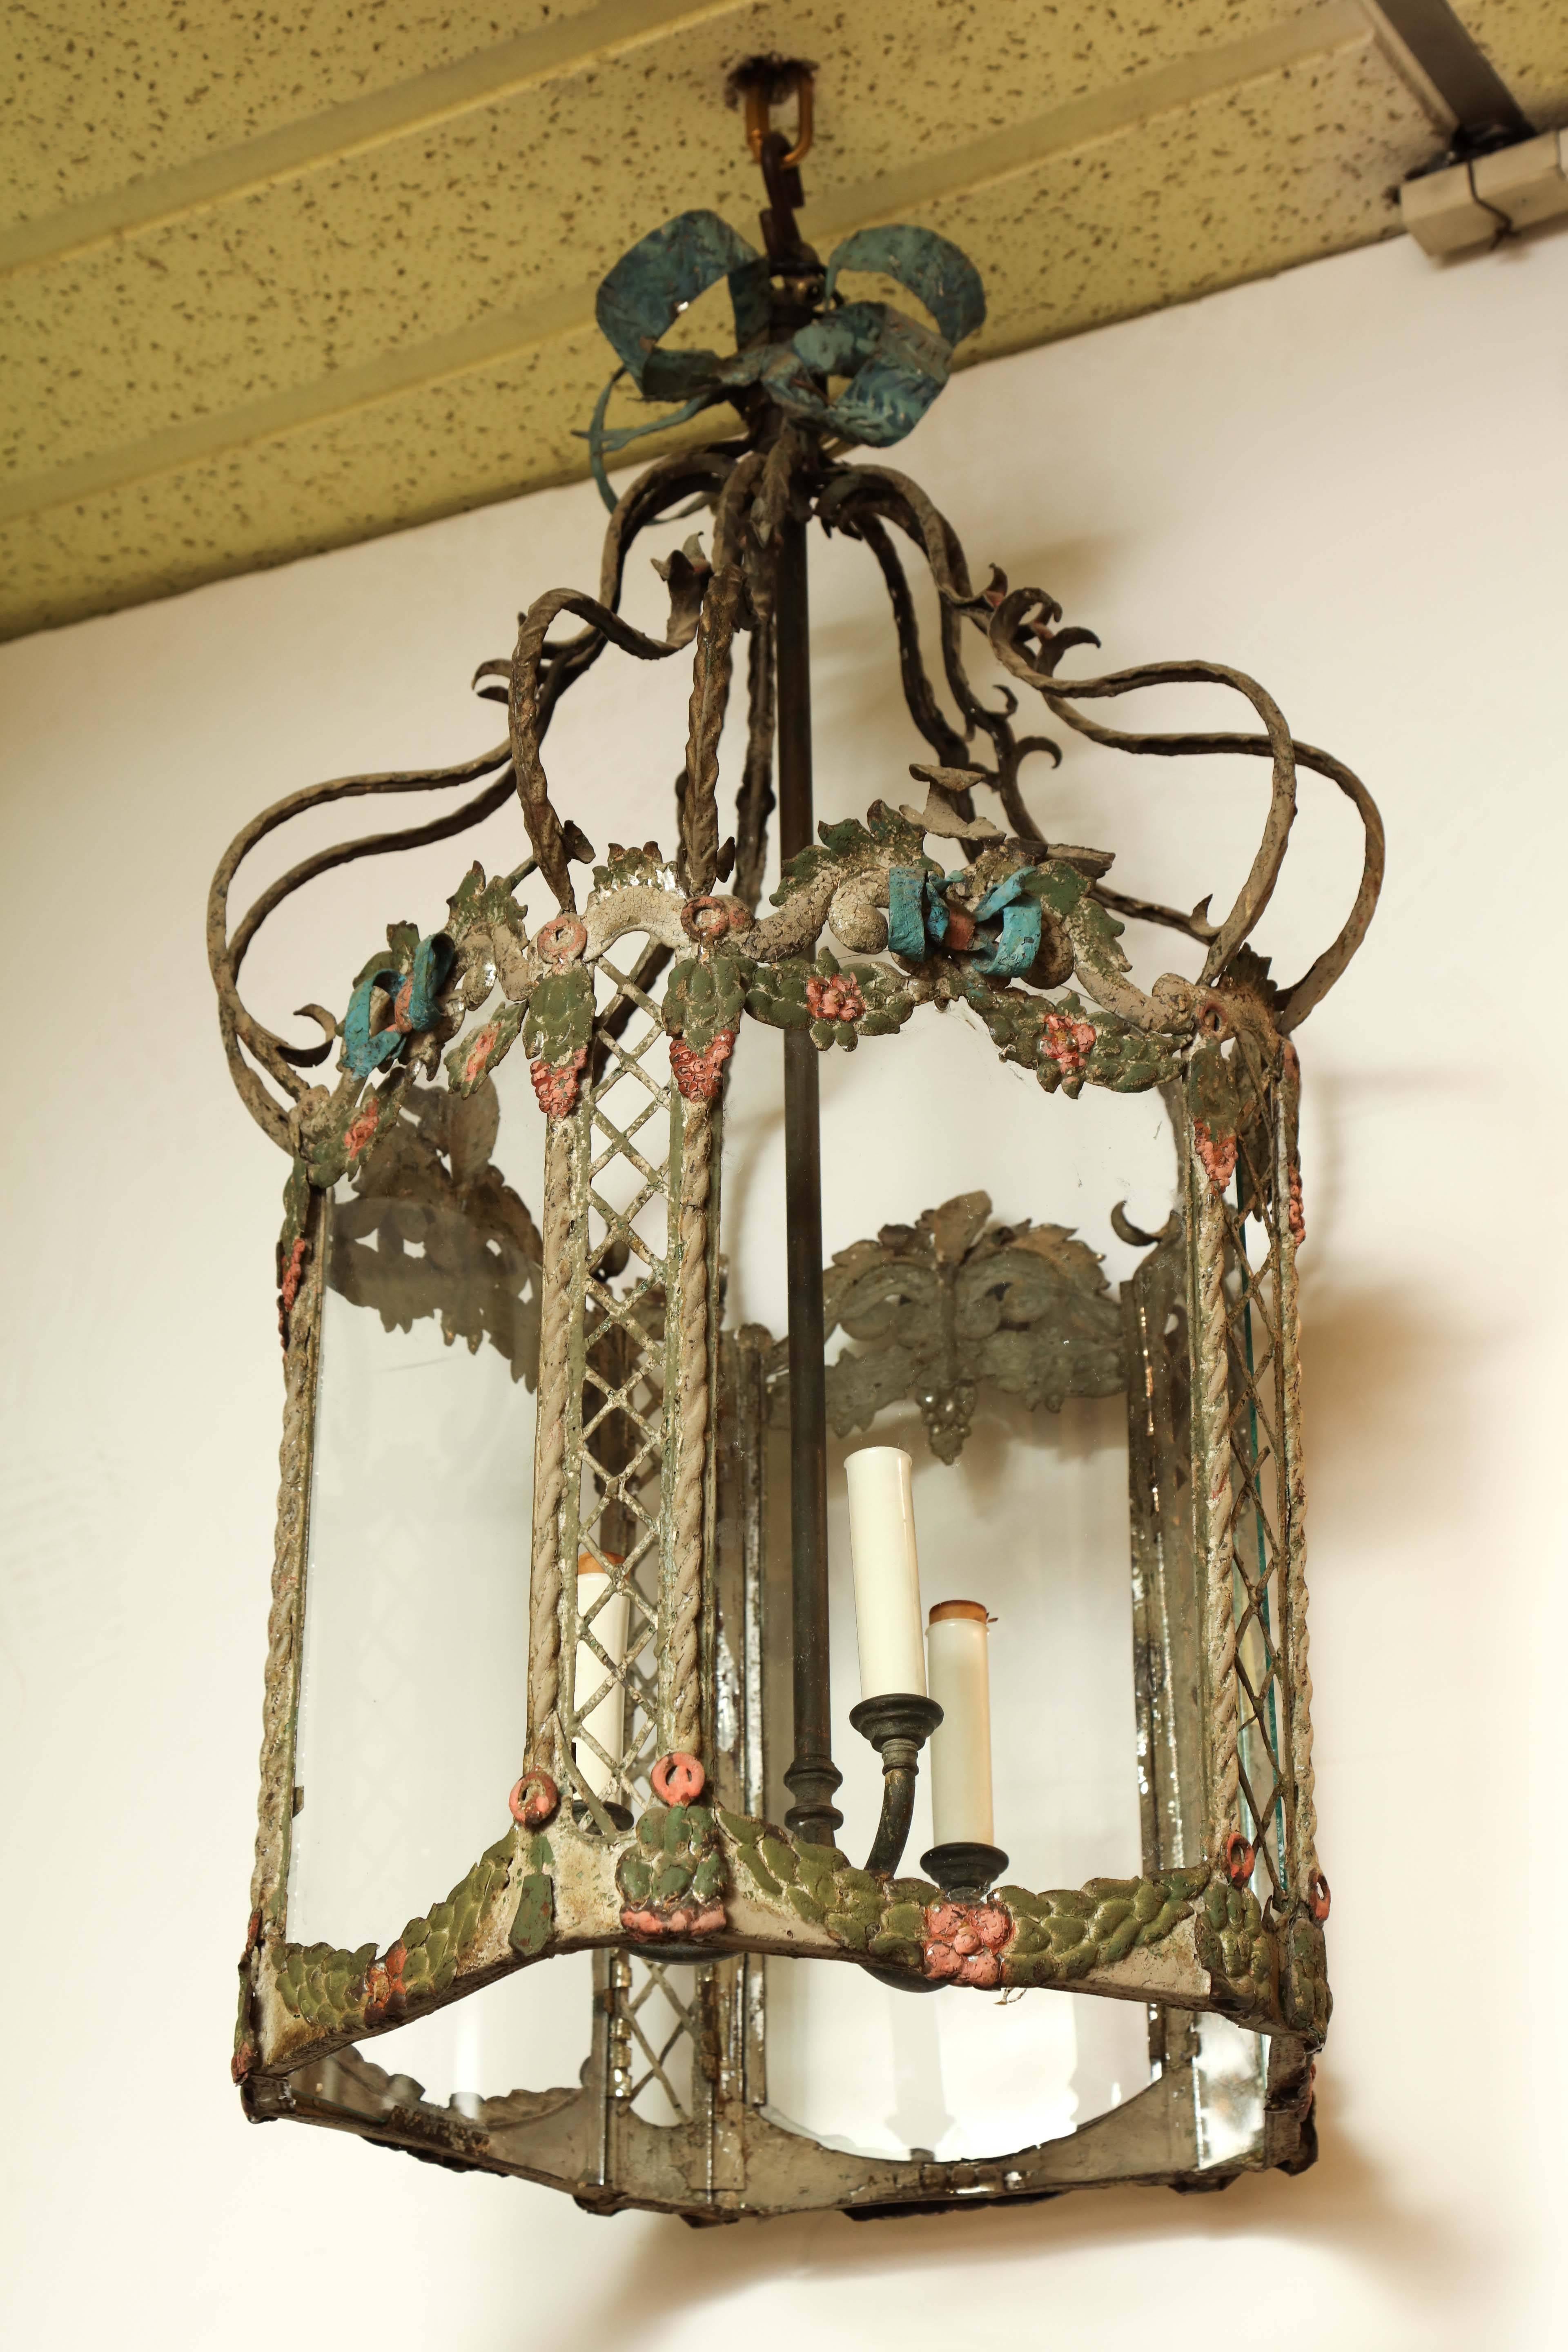 Unusual polychrome Italian tole peinte hall lantern with bowknots, flowers and door.